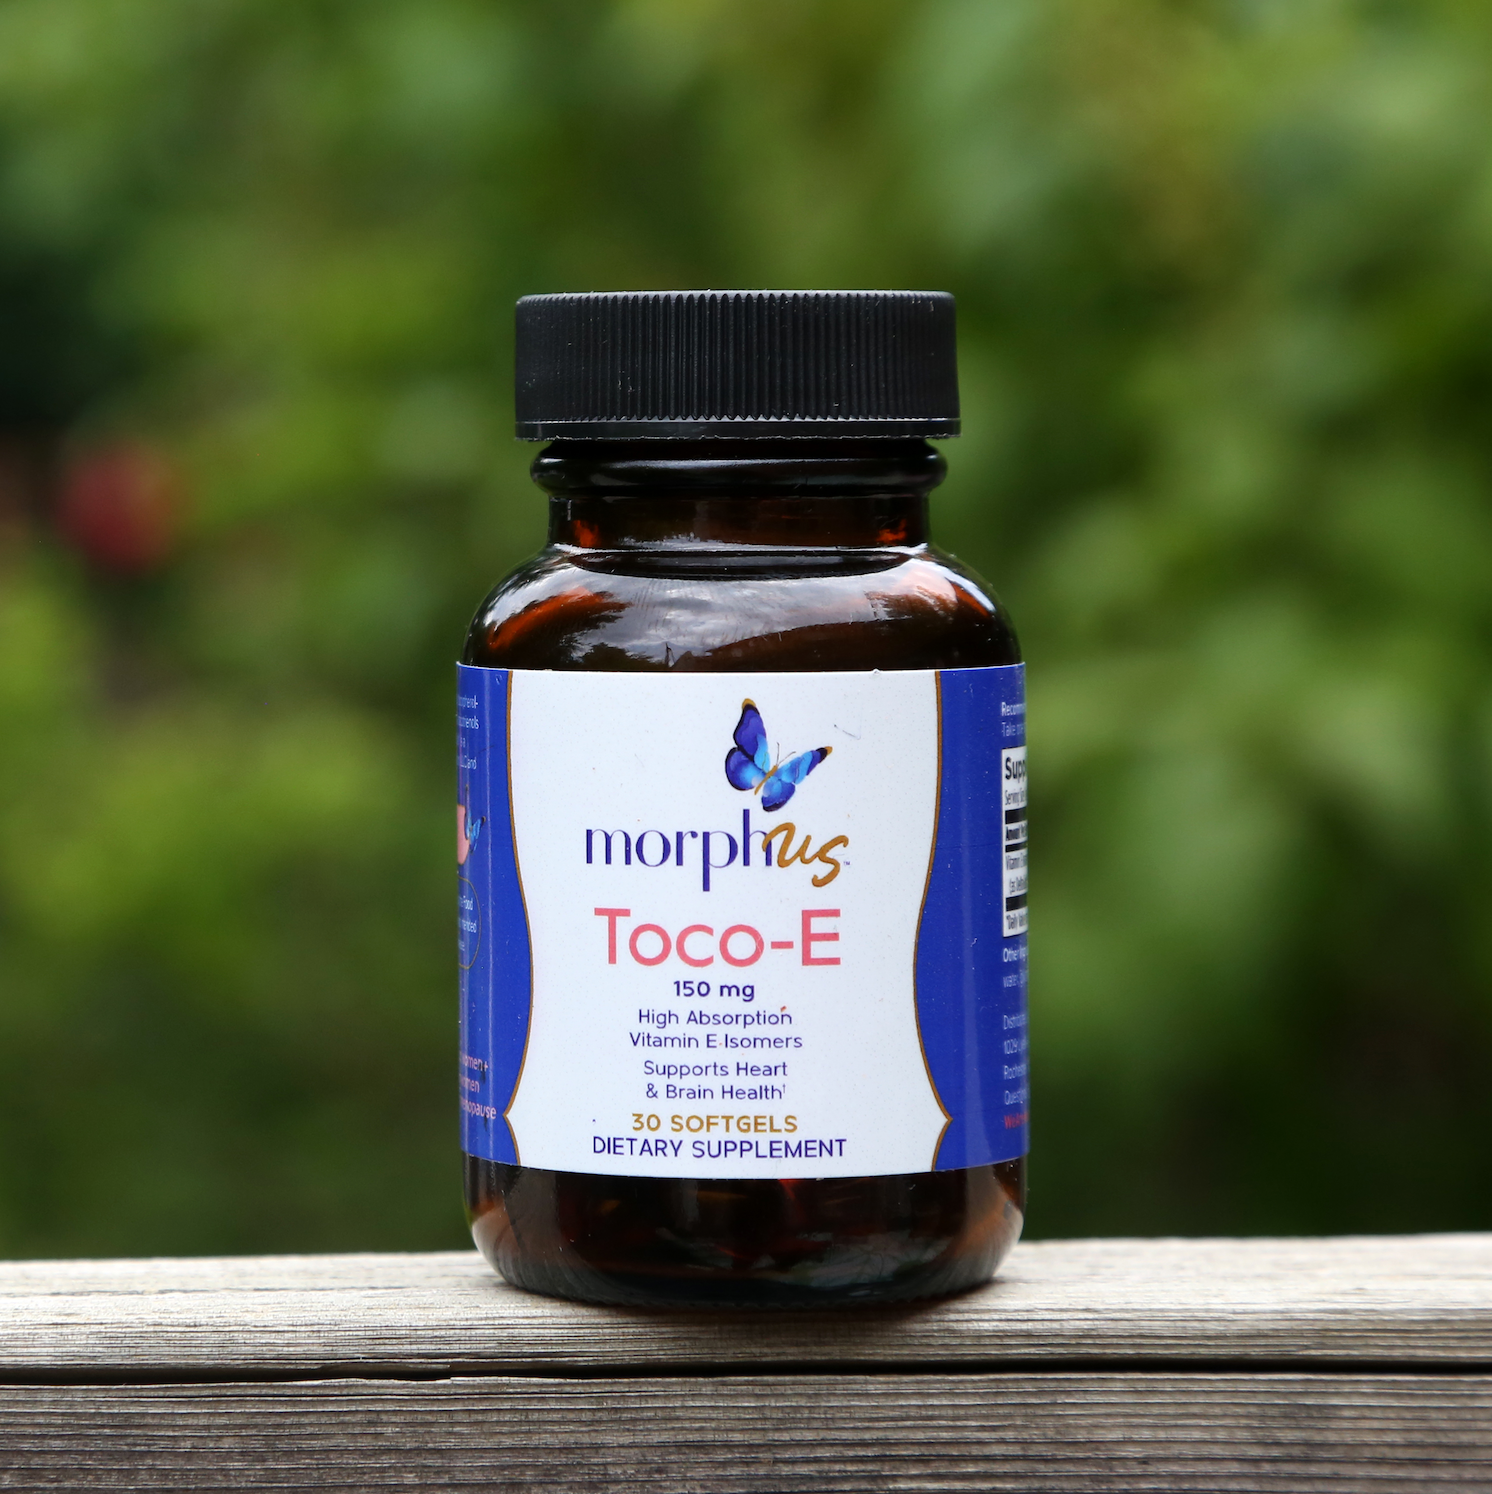 toco-e tocotrienols supplement